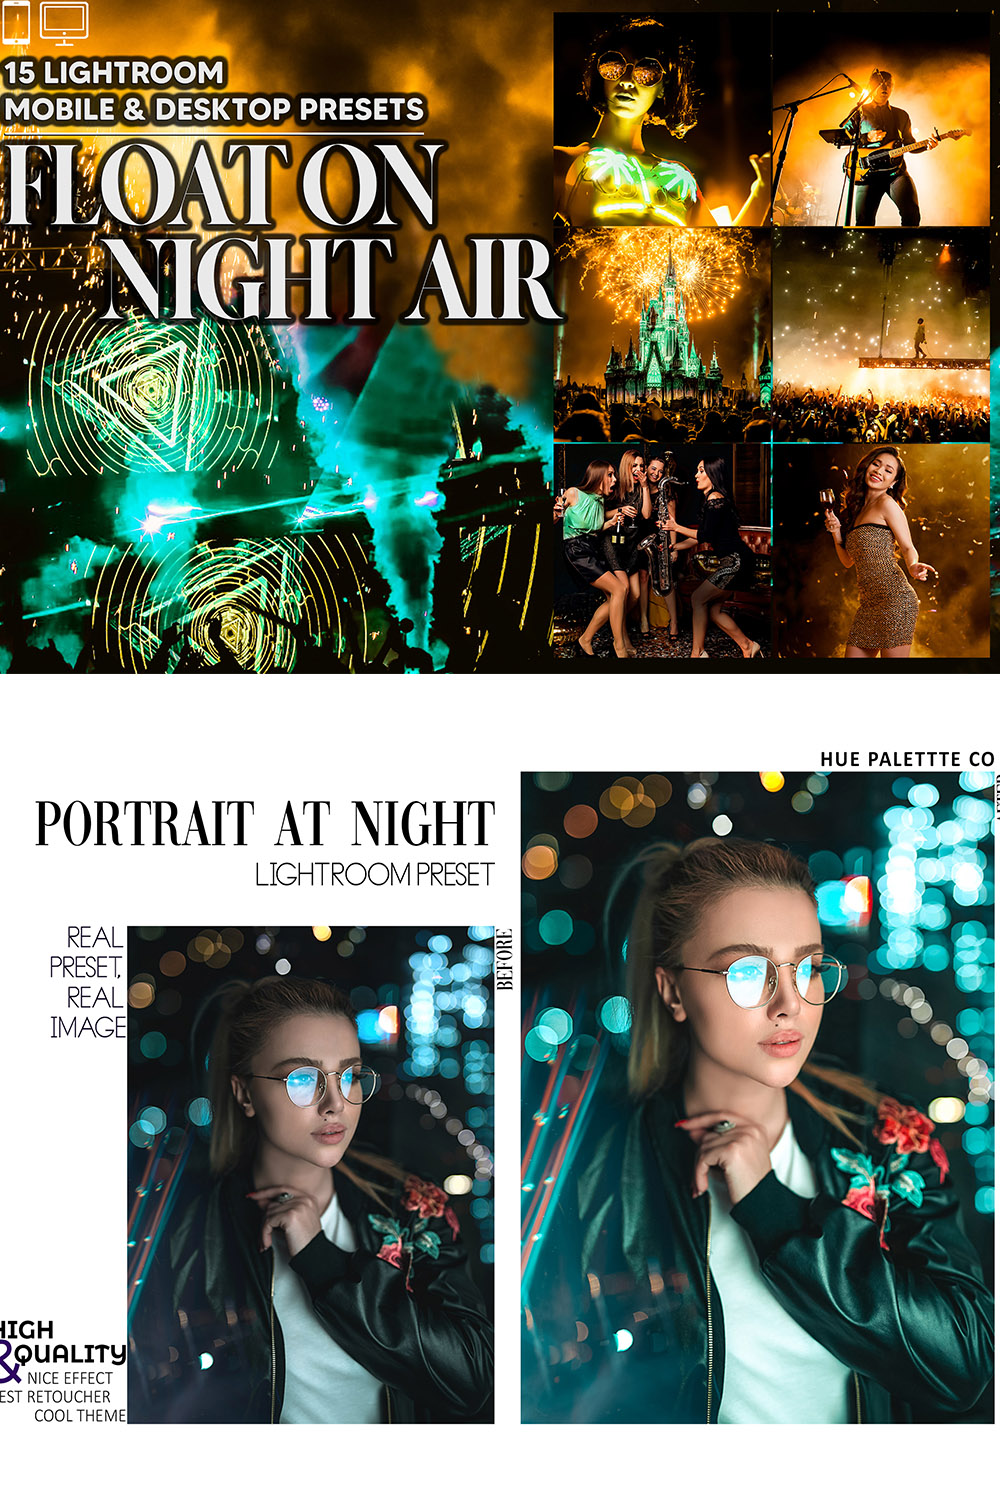 15 Float On Night Air Lightroom Presets, Concert Mobile Preset, Party Club Desktop, Lifestyle Portrait Theme Instagram LR Filter DNG Bright pinterest preview image.